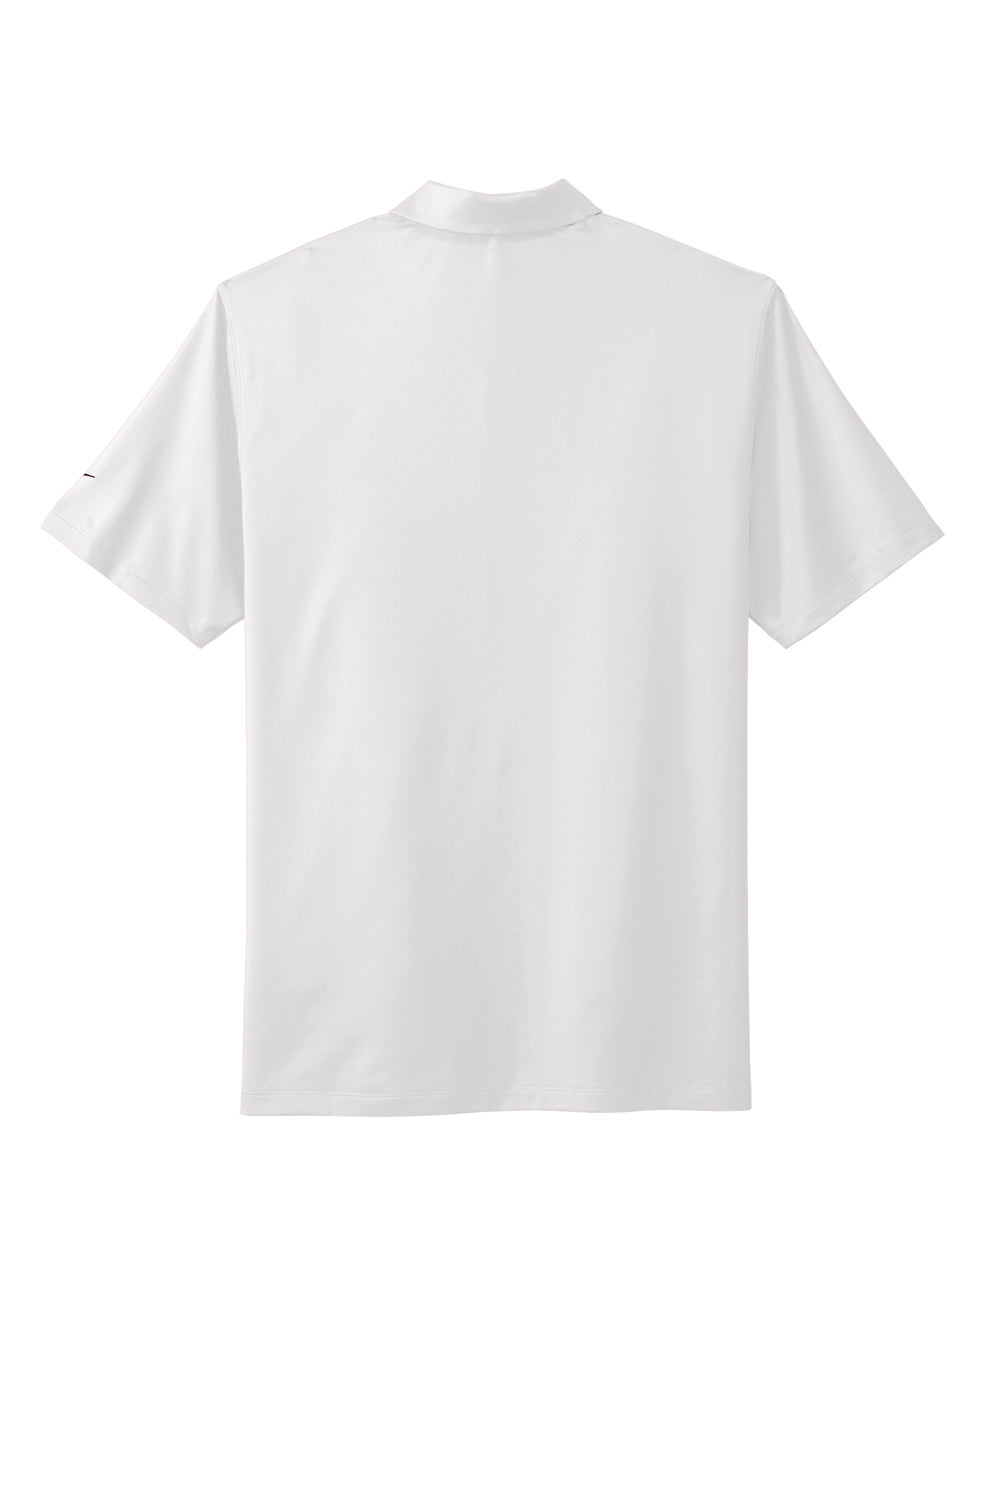 Nike NKDC2108 Mens Vapor Dri-Fit Moisture Wicking Short Sleeve Polo Shirt White Flat Back